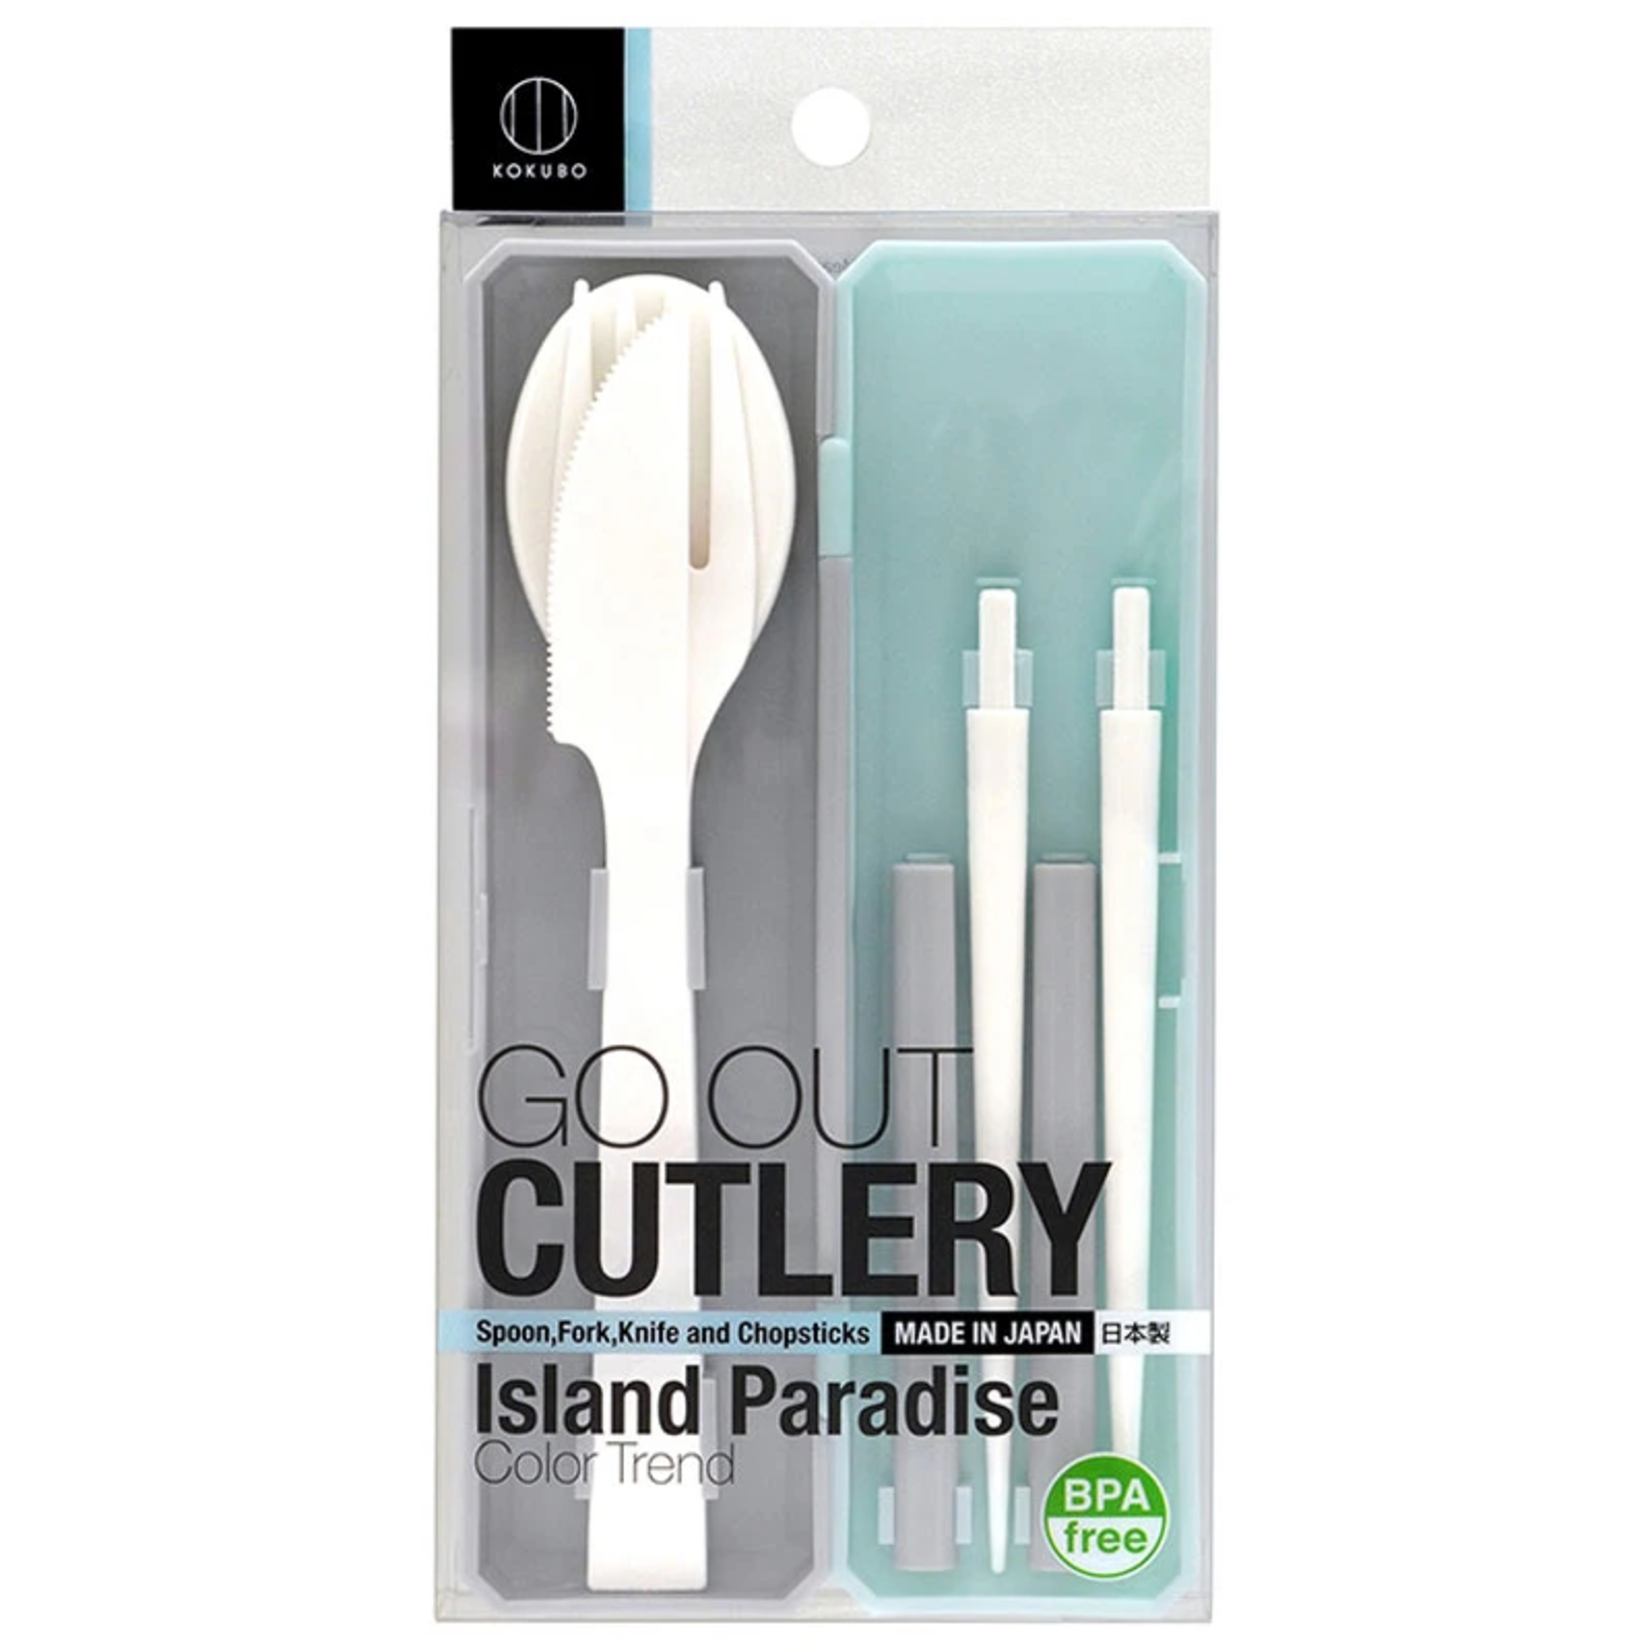 Kokubo Plastic Chopsticks / Spoon / Fork Set w/case KK-349